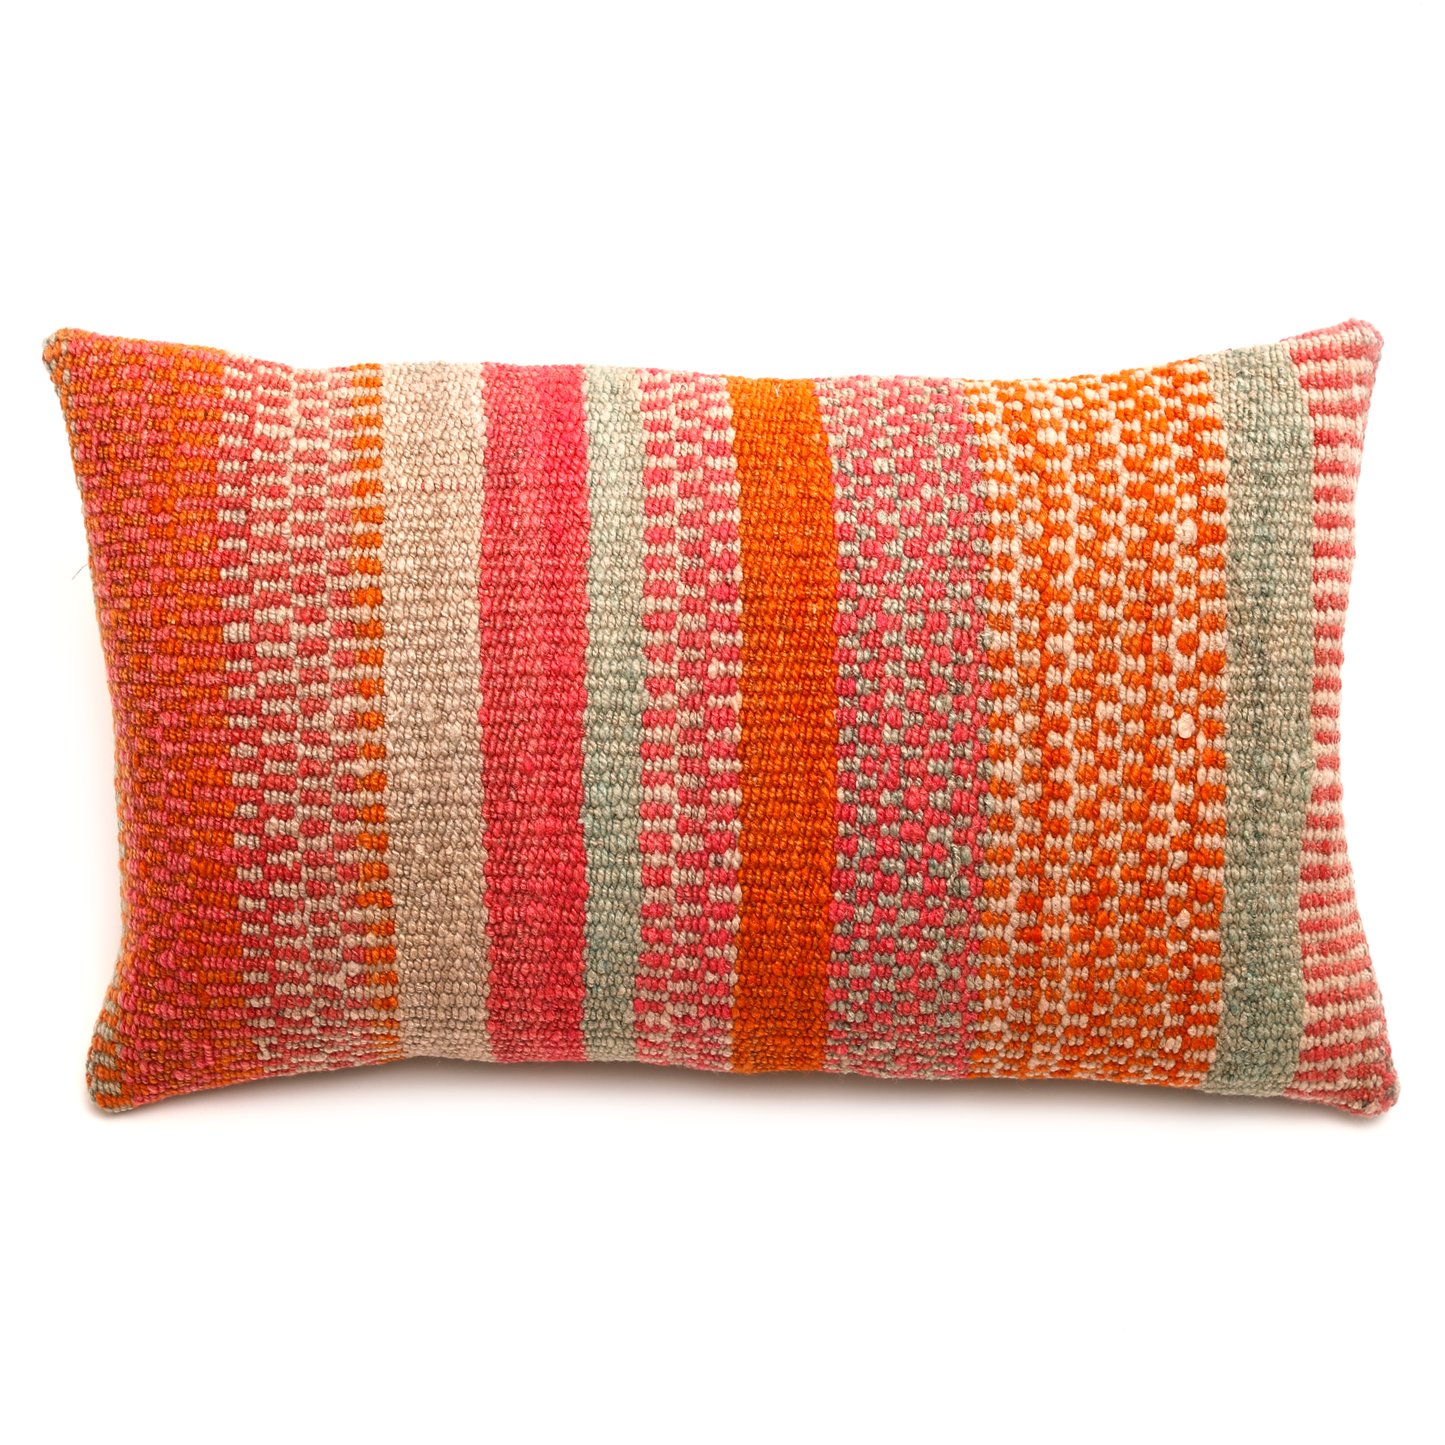 Intiearth vintage woven frazada decorative throw pillow lumbar colorful wool designs